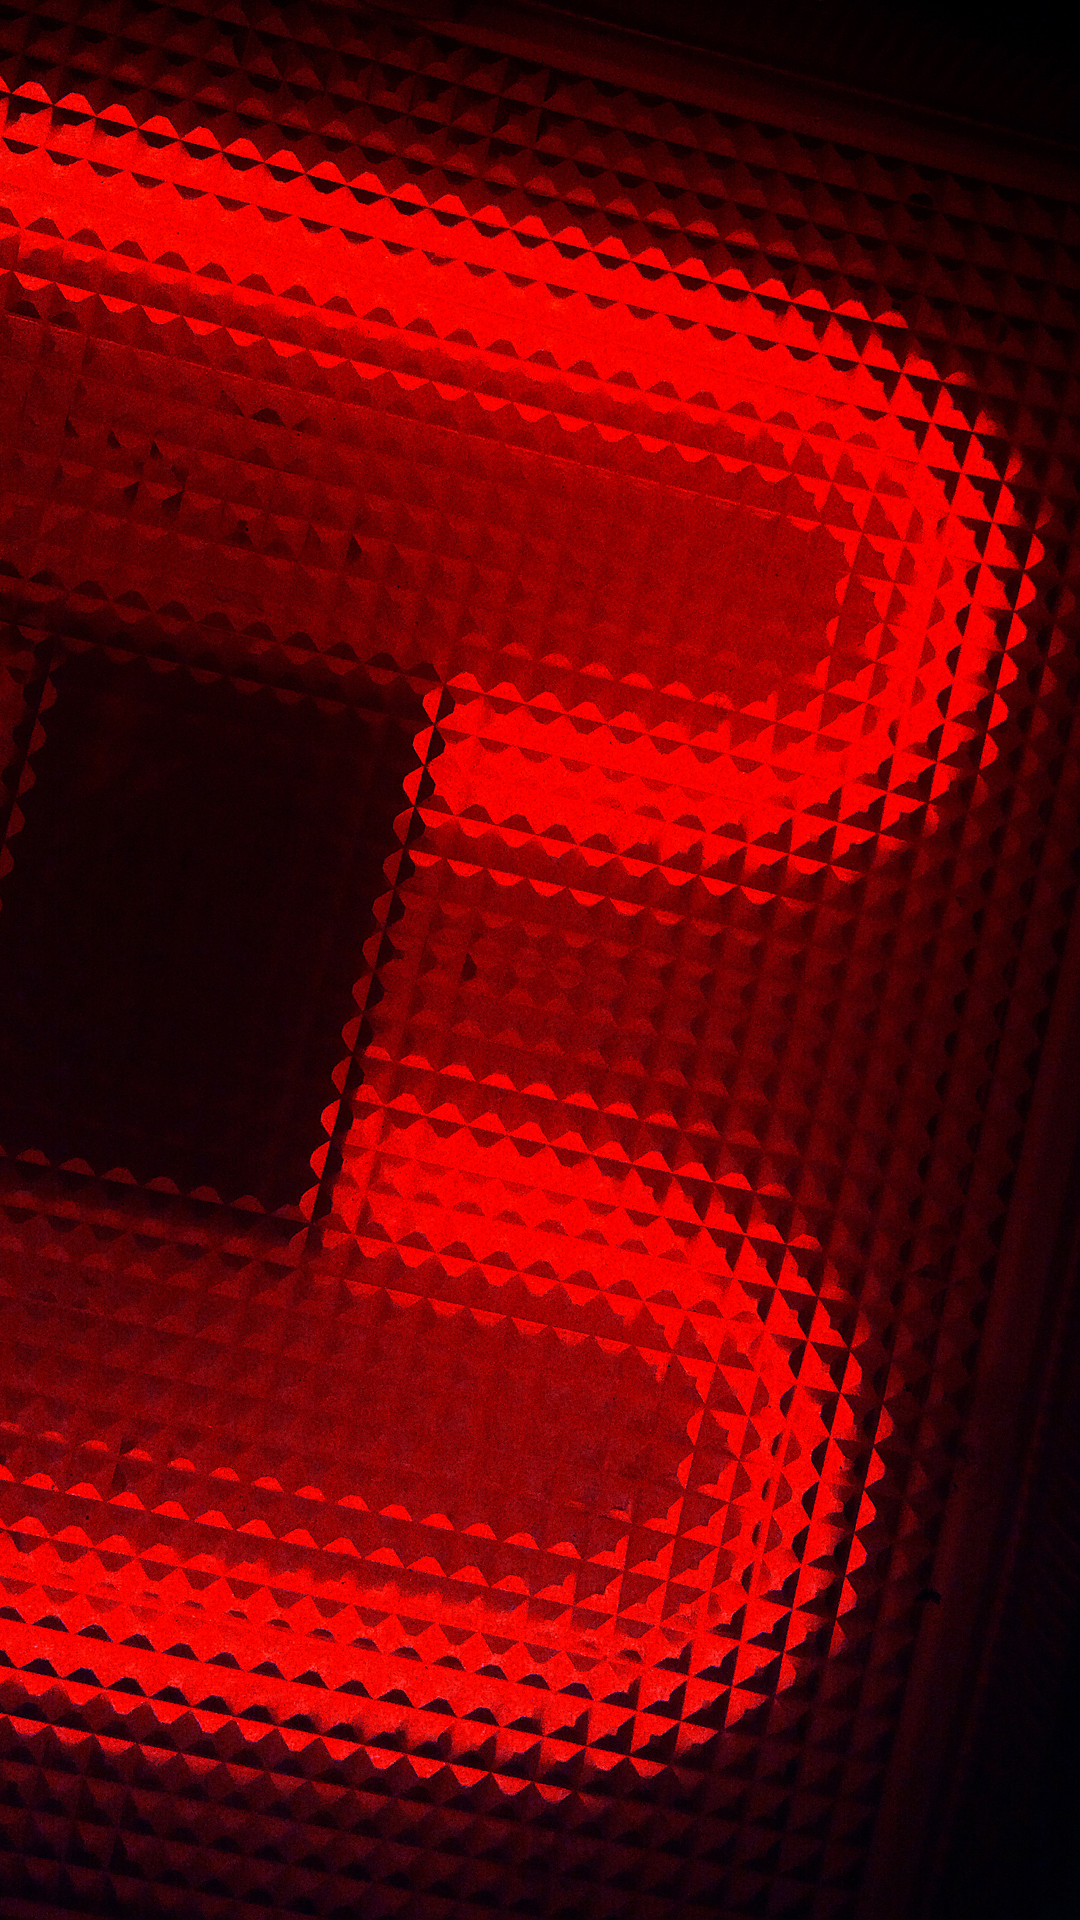 red lumia wallpaper